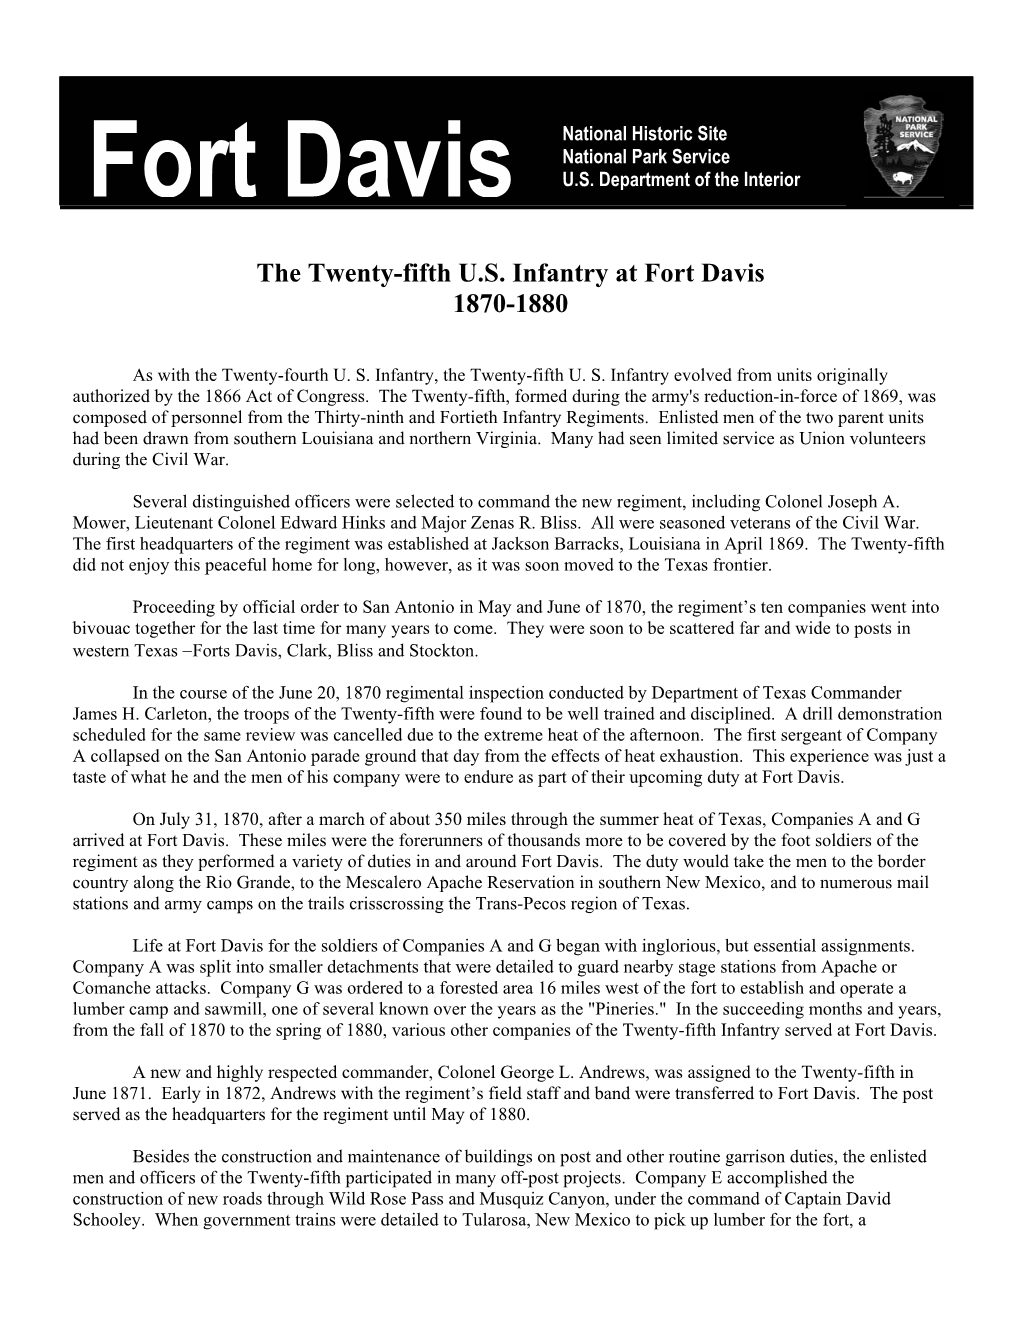 The Twenty-Fifth US Infantry at Fort Davis 1870-1880